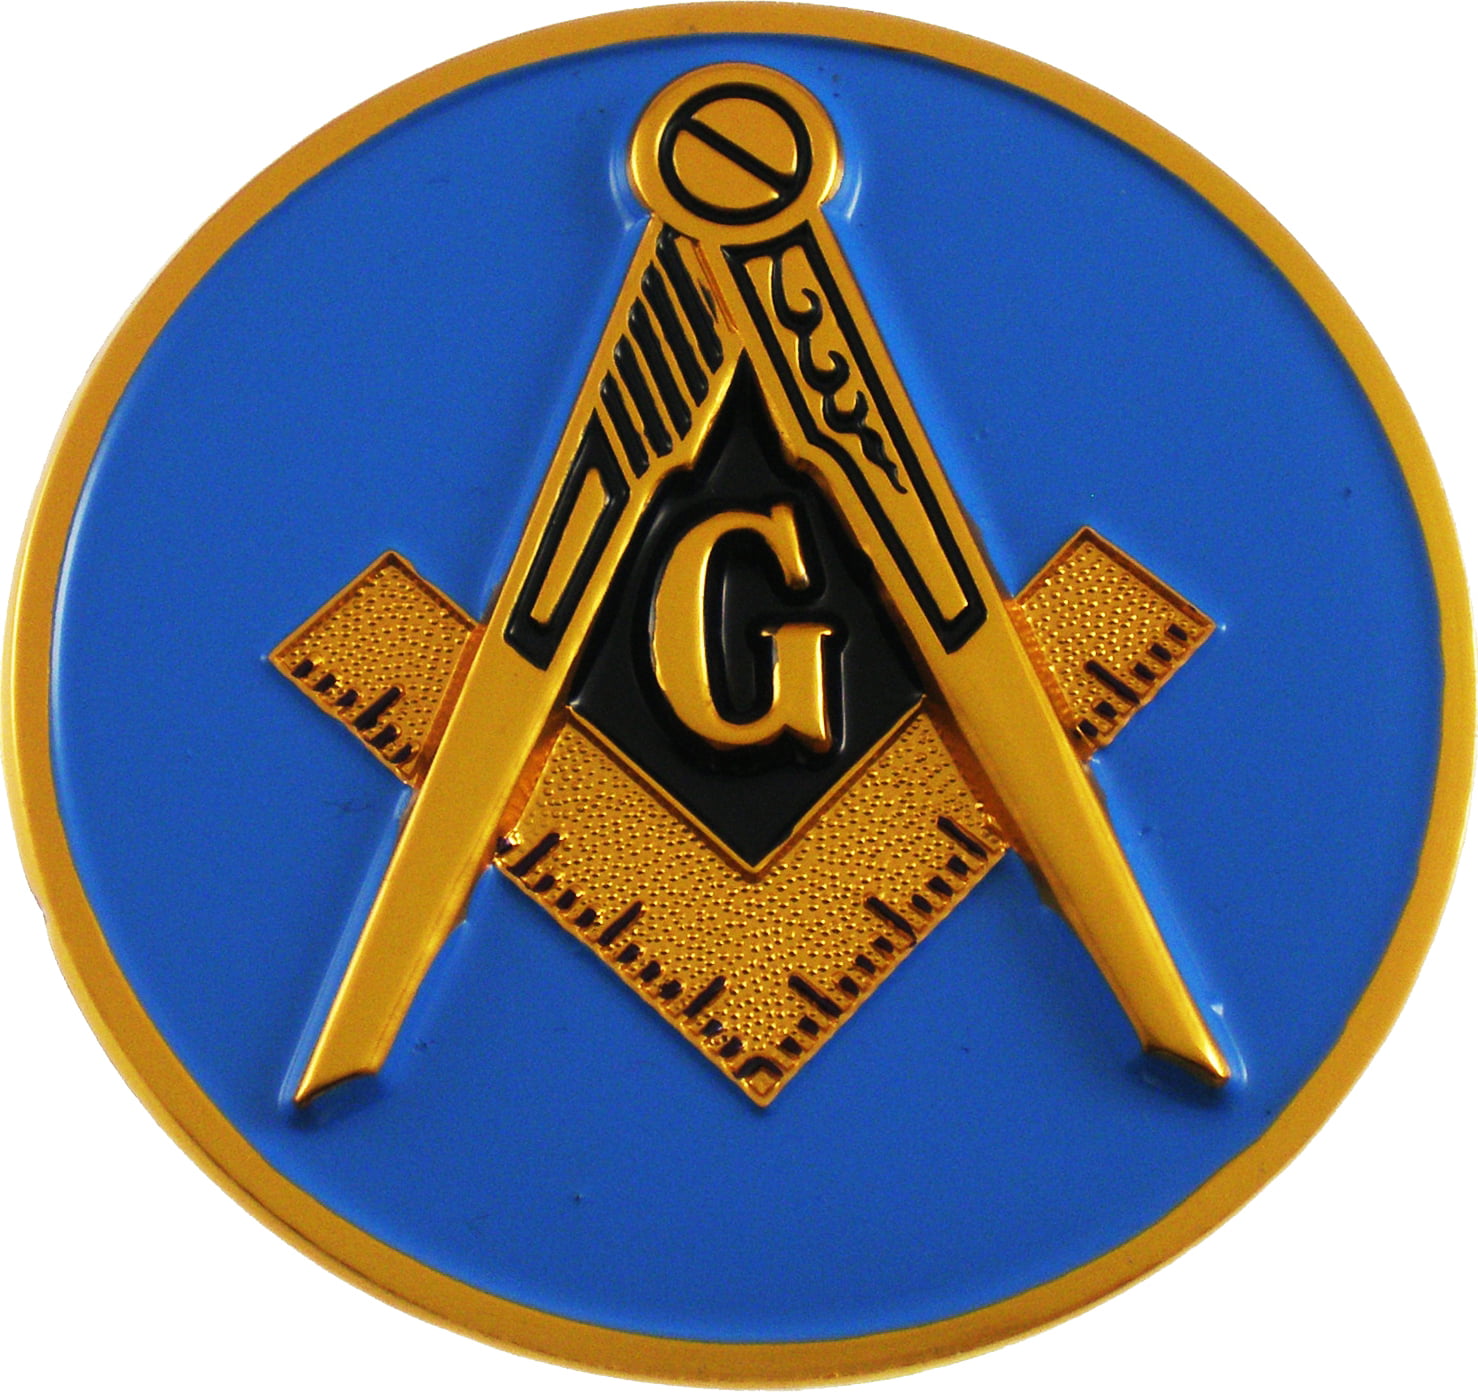 Mason masonic blue back flag 2.75 car chrome round emblem decal 3d badge